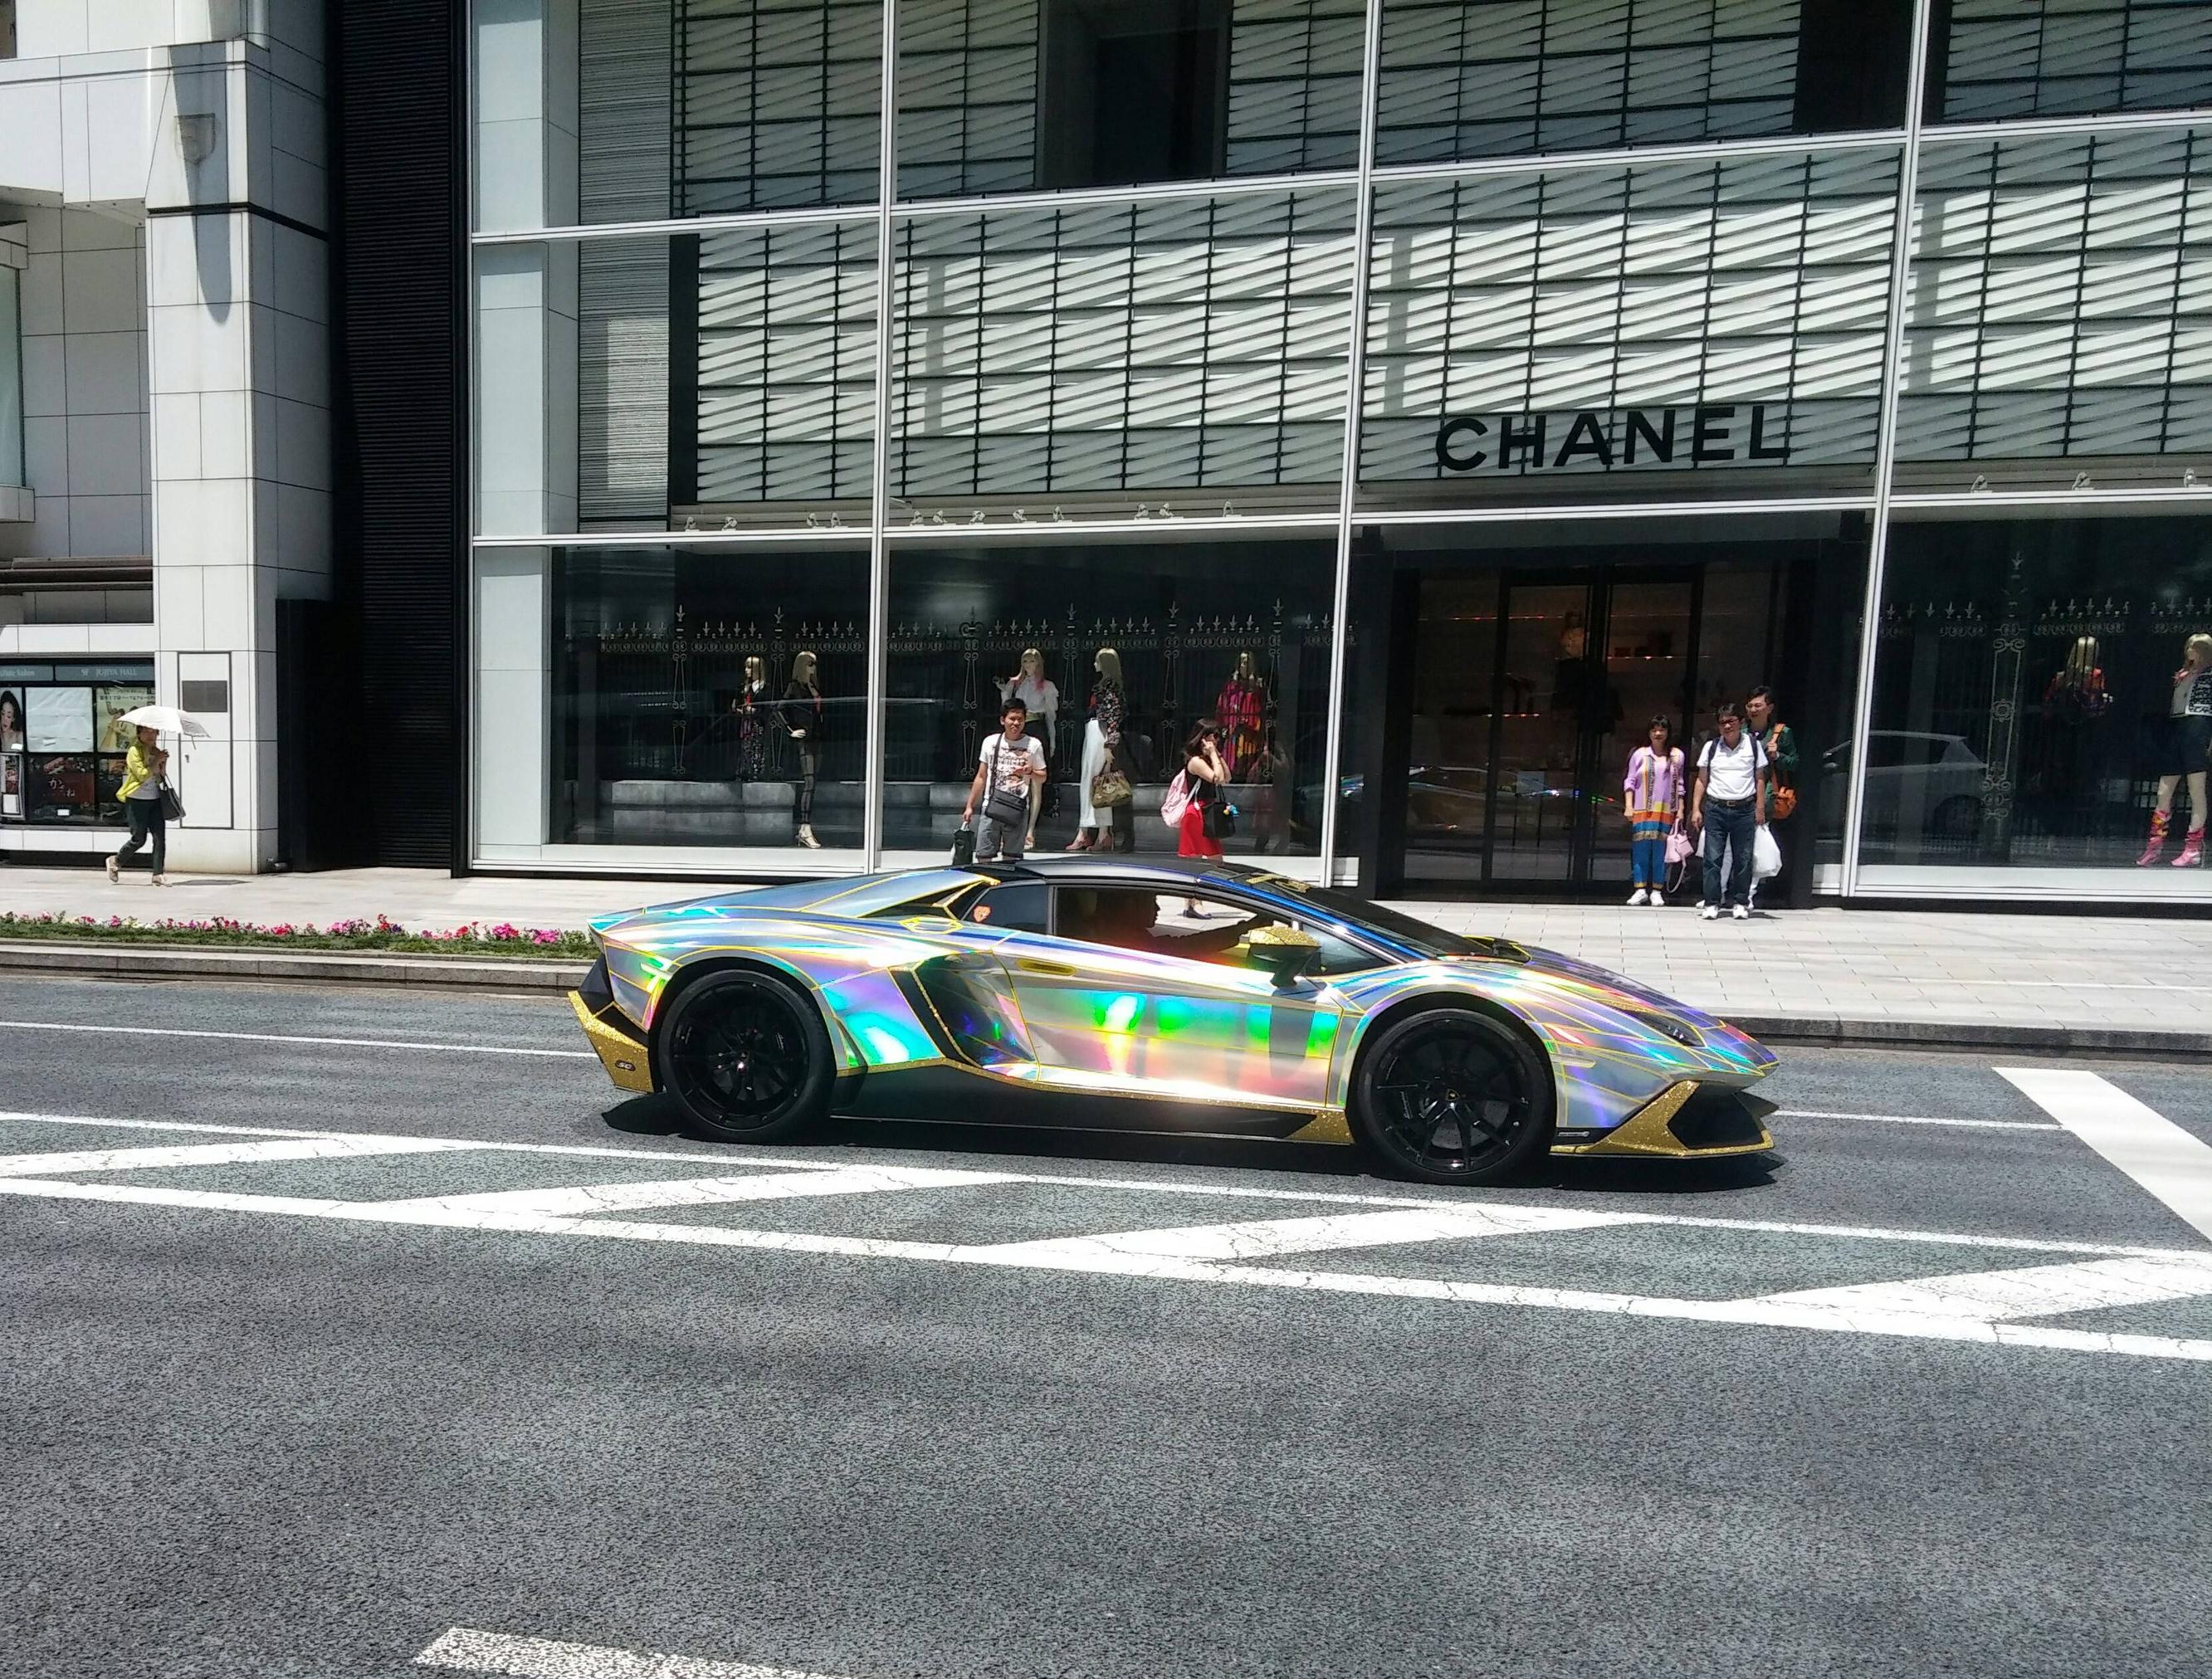 Coolest car in Japan